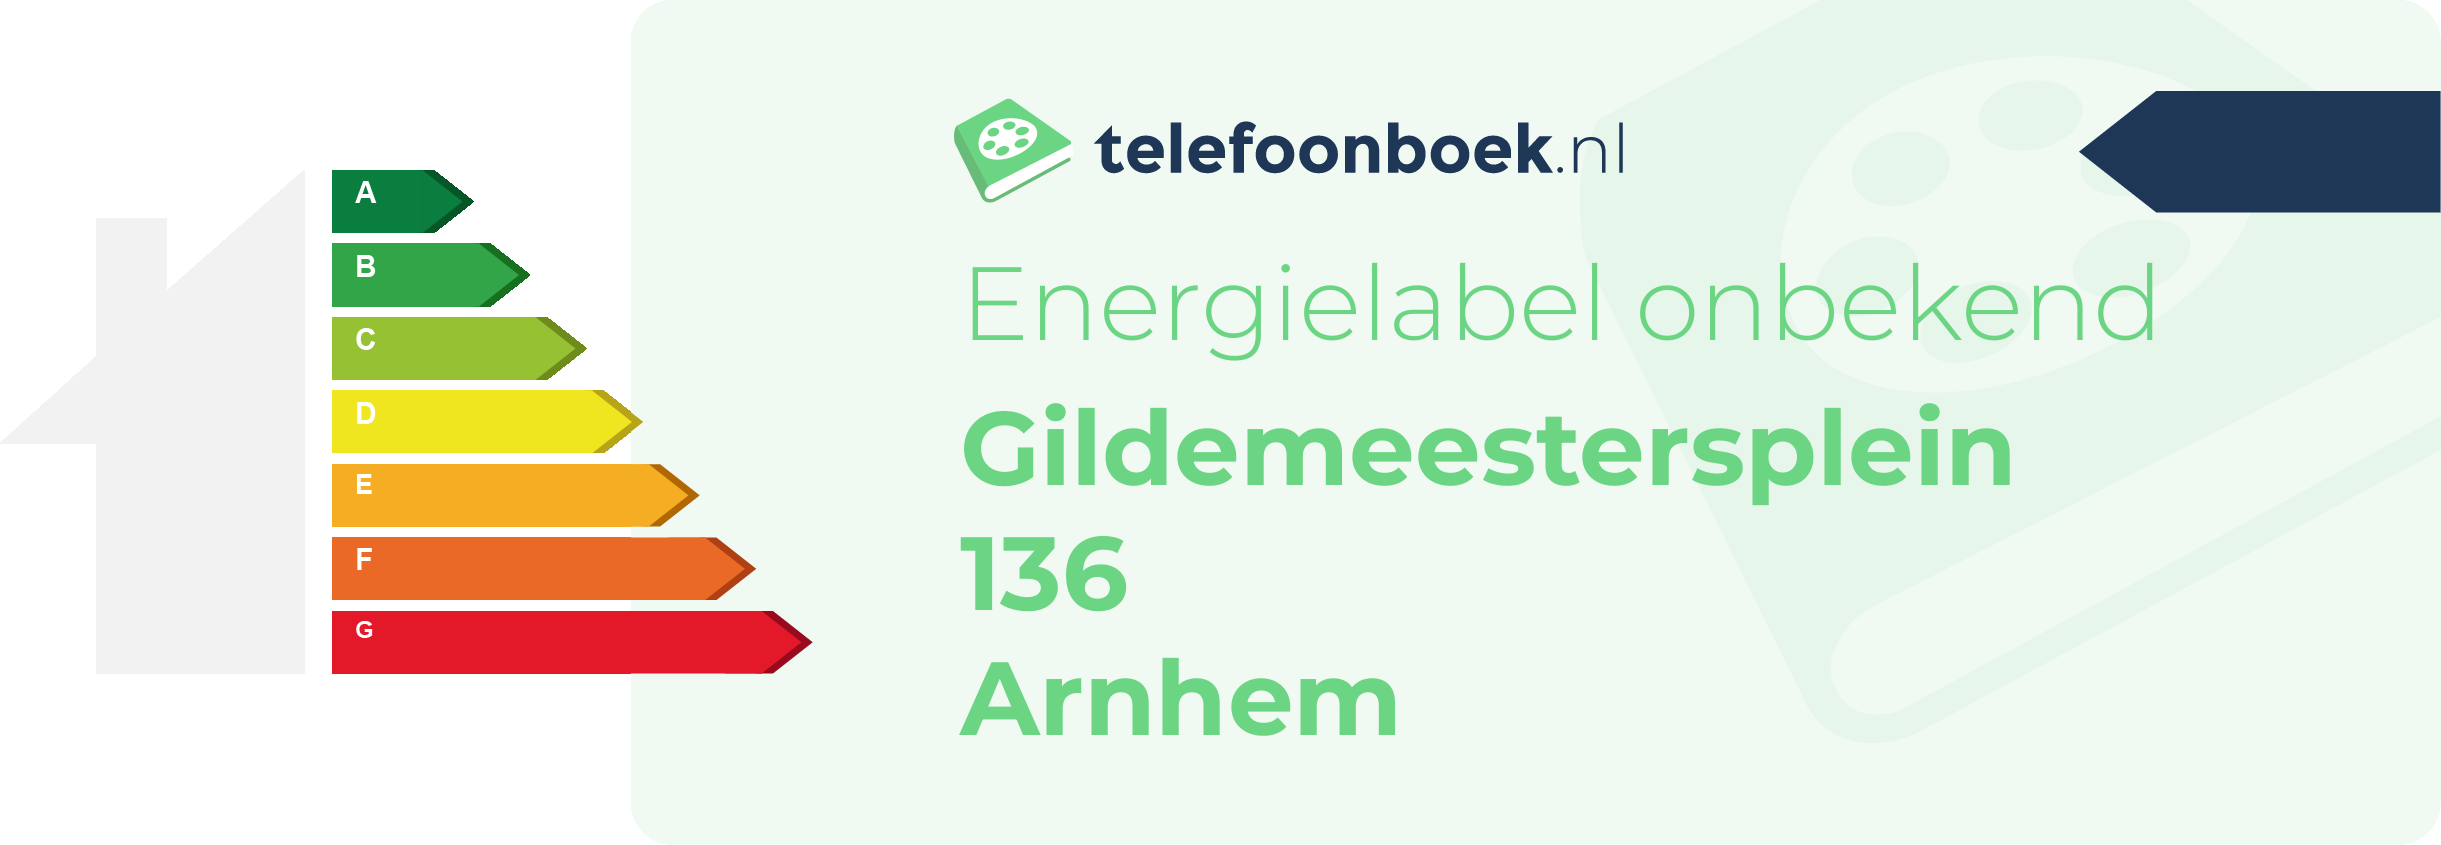 Energielabel Gildemeestersplein 136 Arnhem